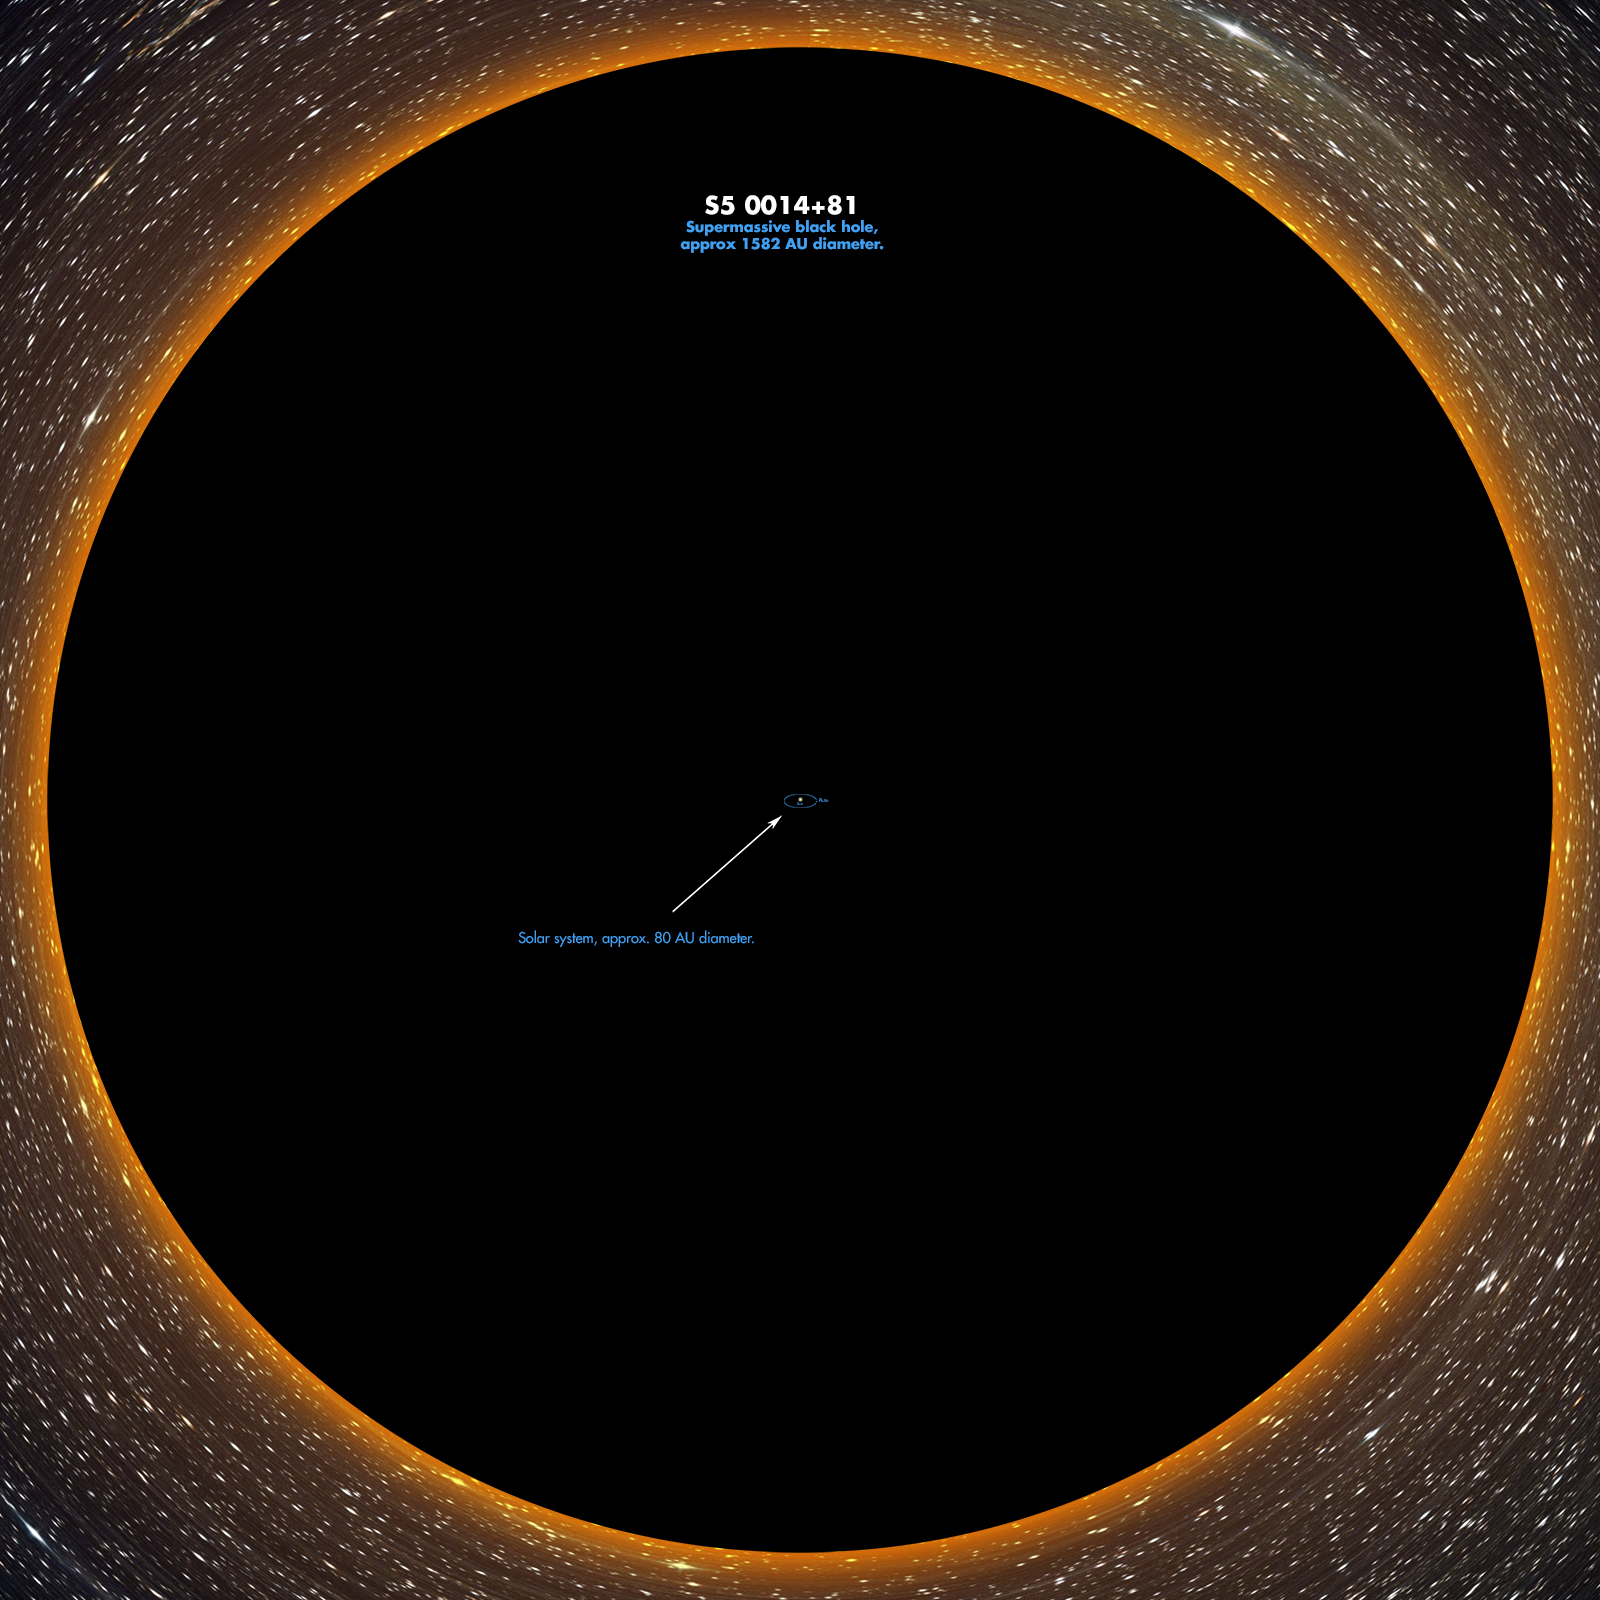 Supermassive black hole S5 0014+81 - Black hole, Space, Supermassive black hole